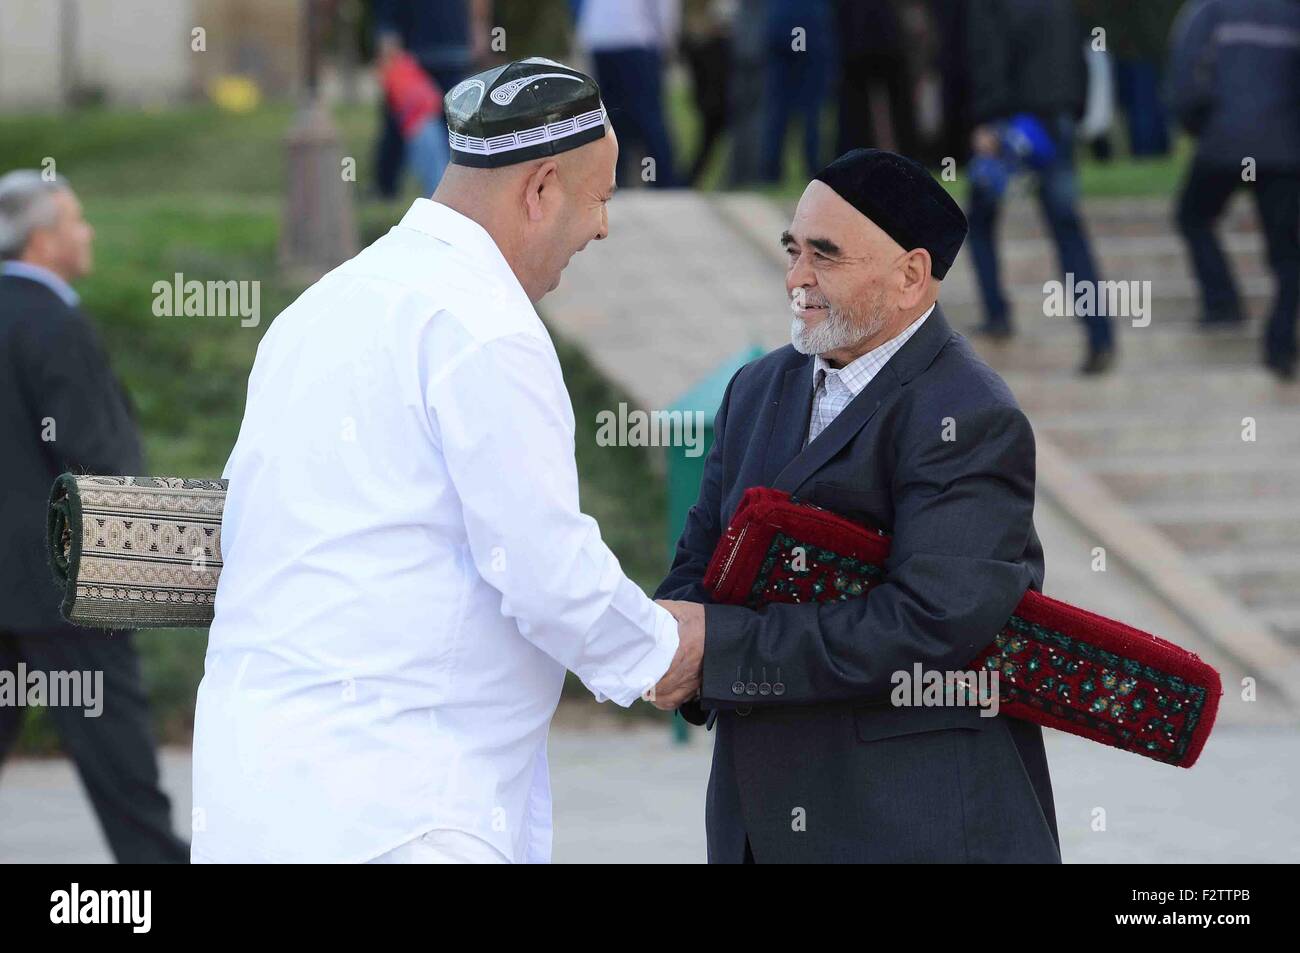 How do you greet someone in uzbekistan?